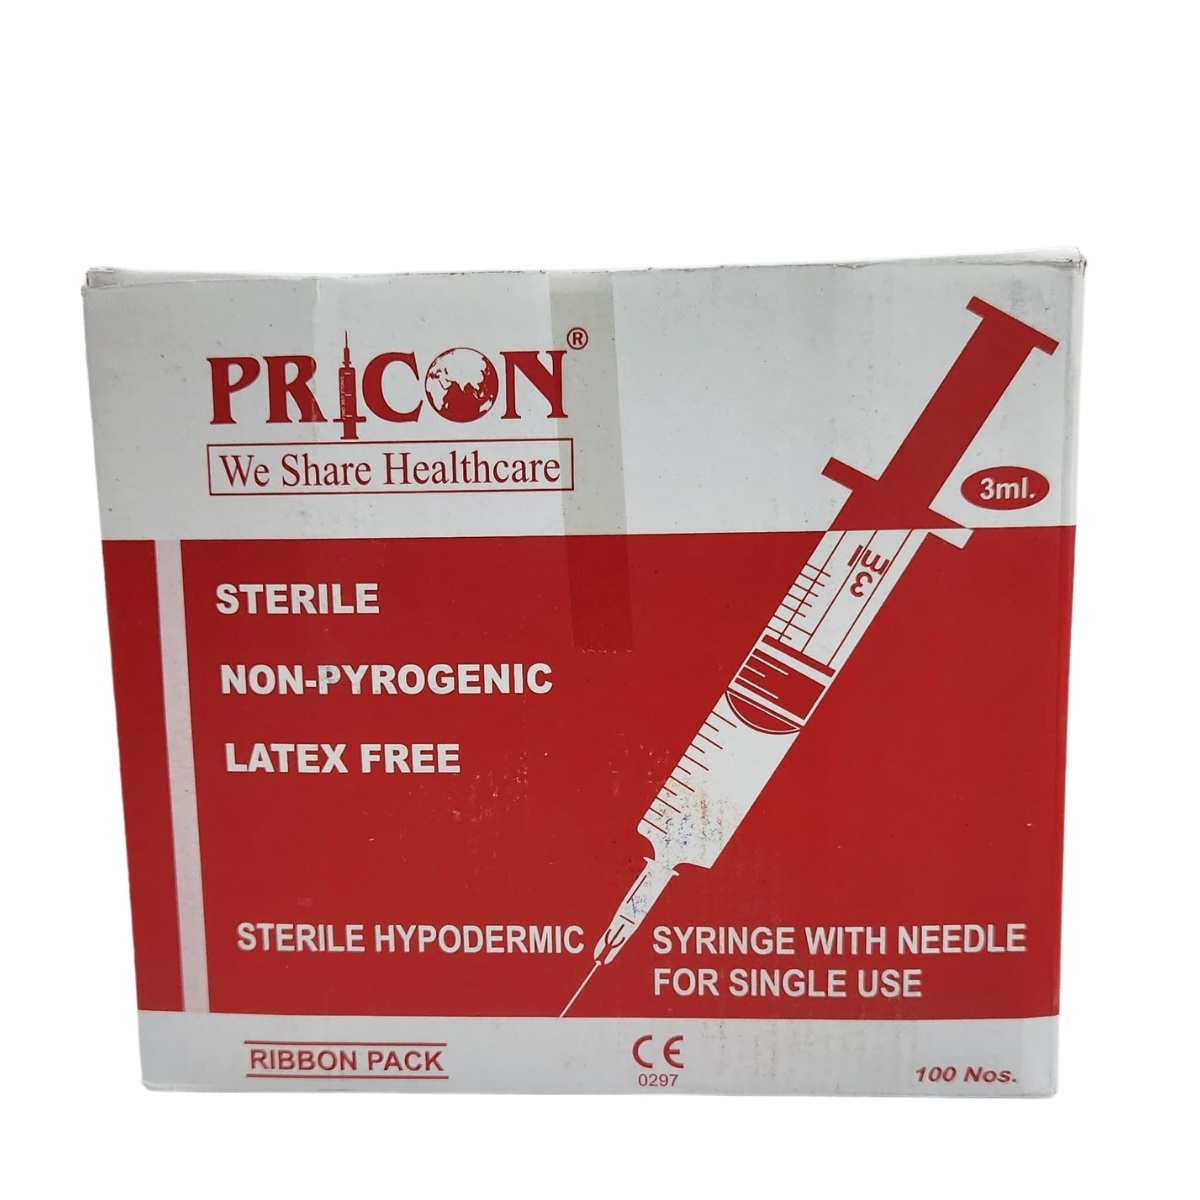 Pricon 3ml Syringe With Needle - 100 Units Pack